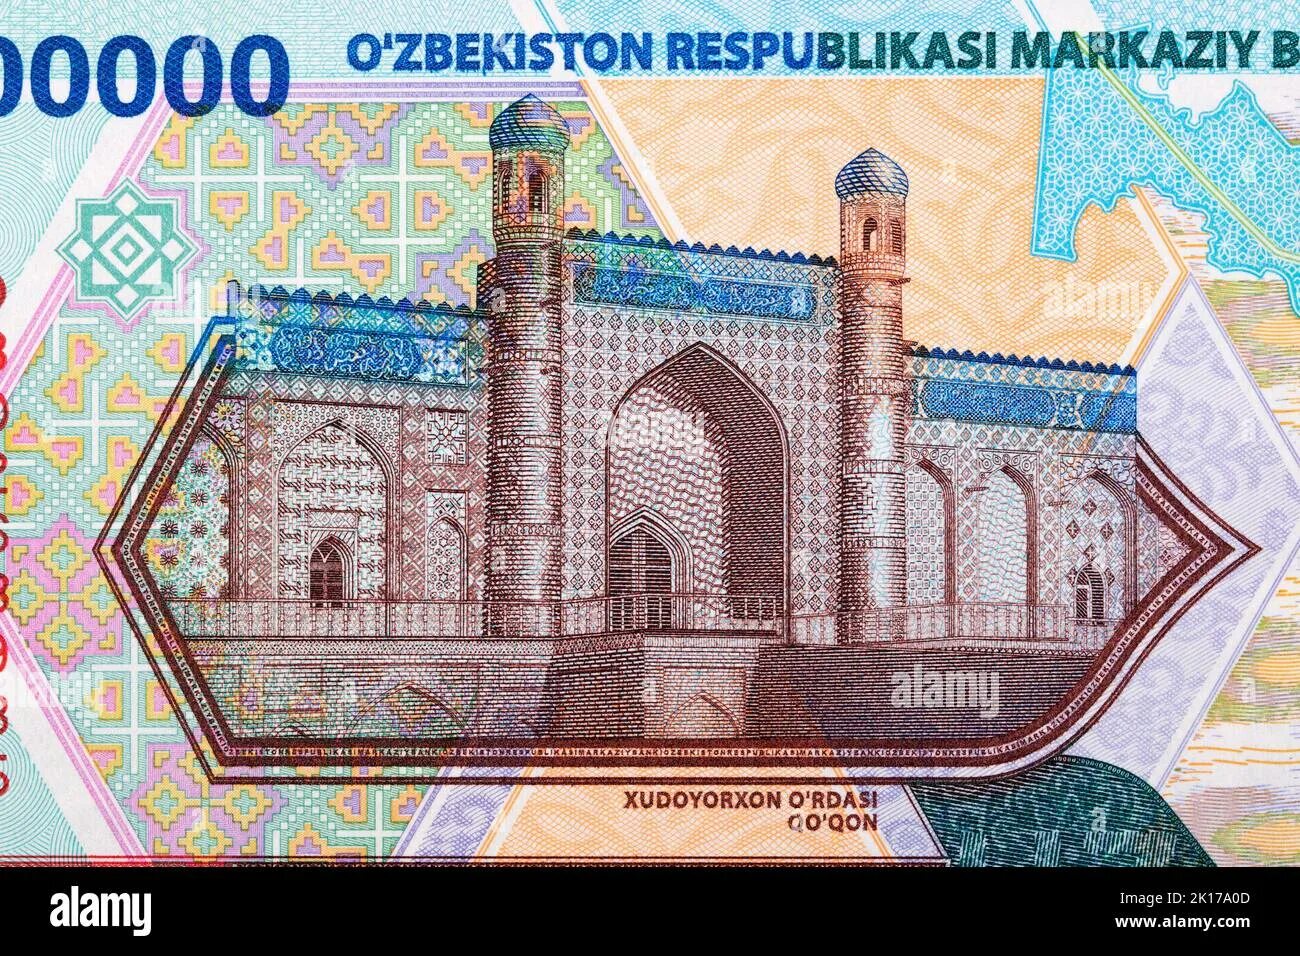 1000000 узбекских в рублях. Palace of Khudayar Khan Коканд. Узбекский сум. Узбекистан Суми. Валюта Узбекистана.